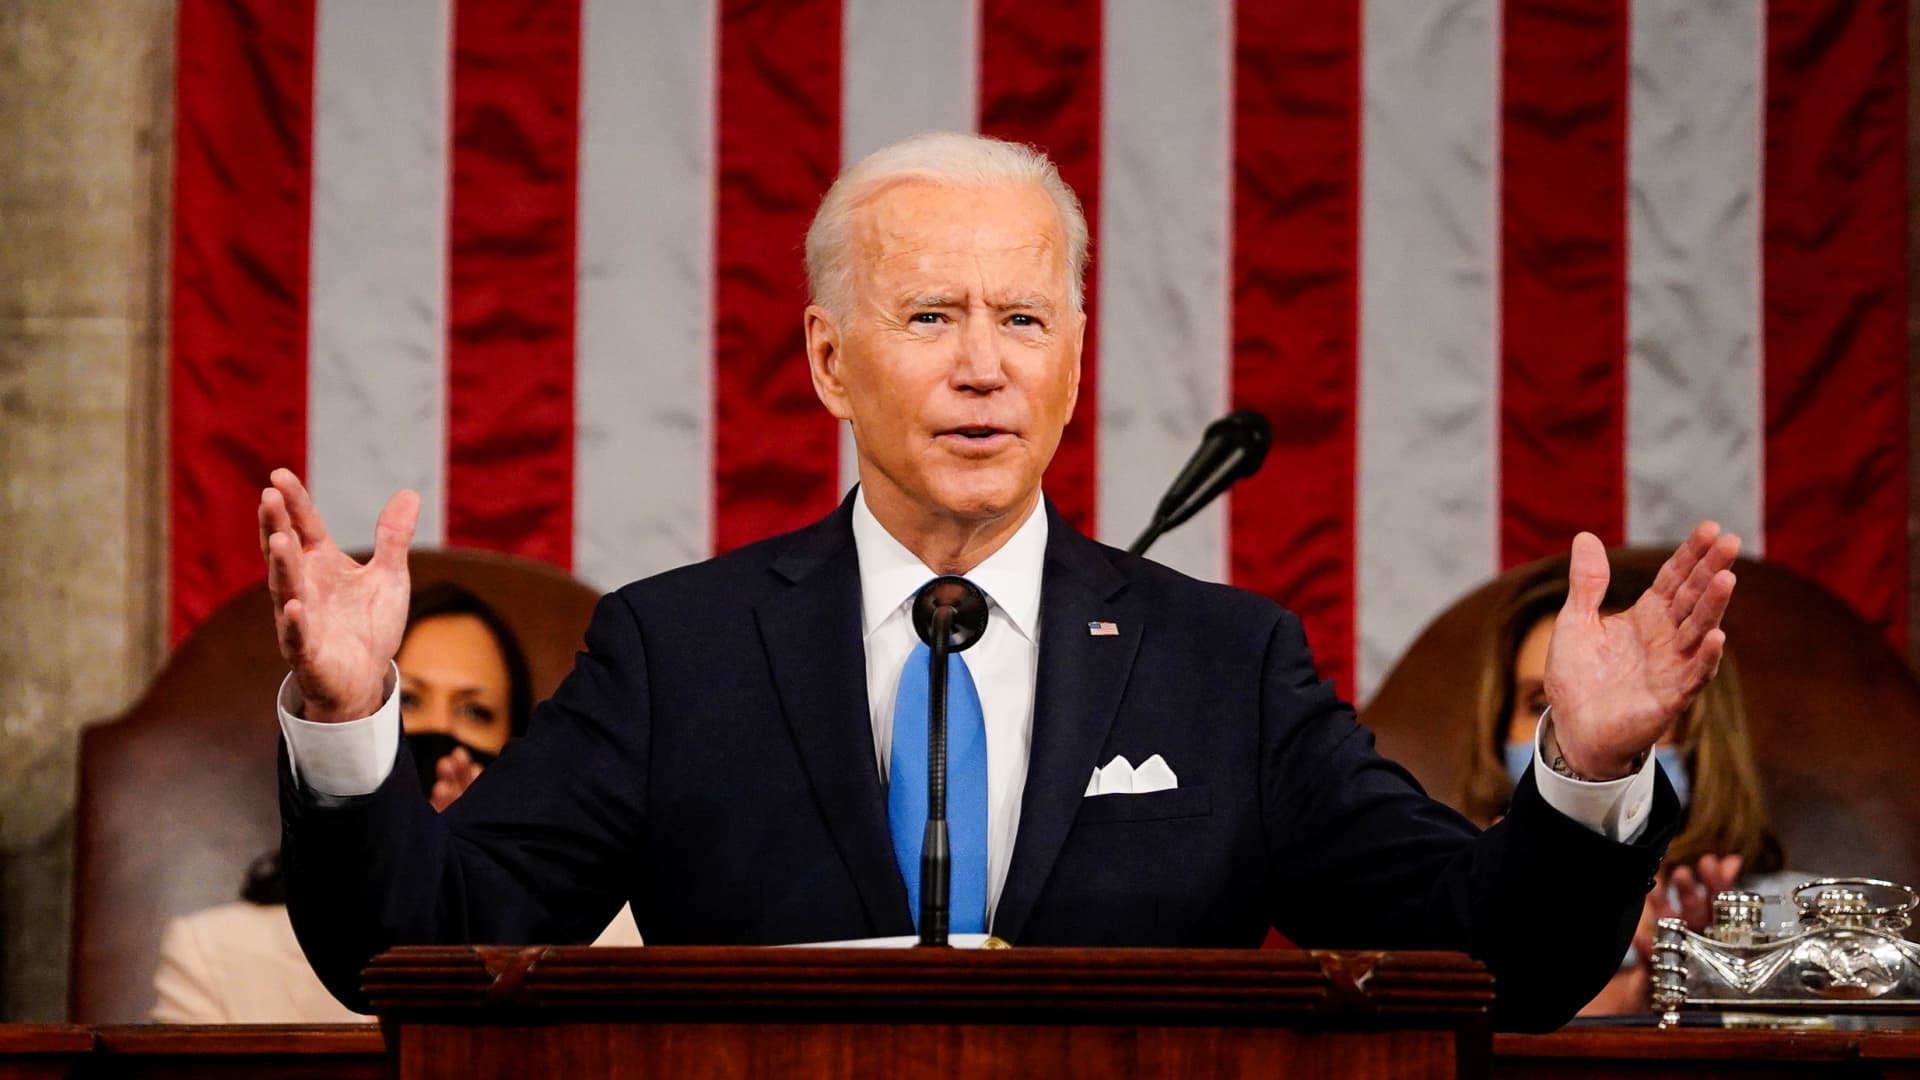 President Joe Biden addresses a joint session of Congress on April 28, 2021.